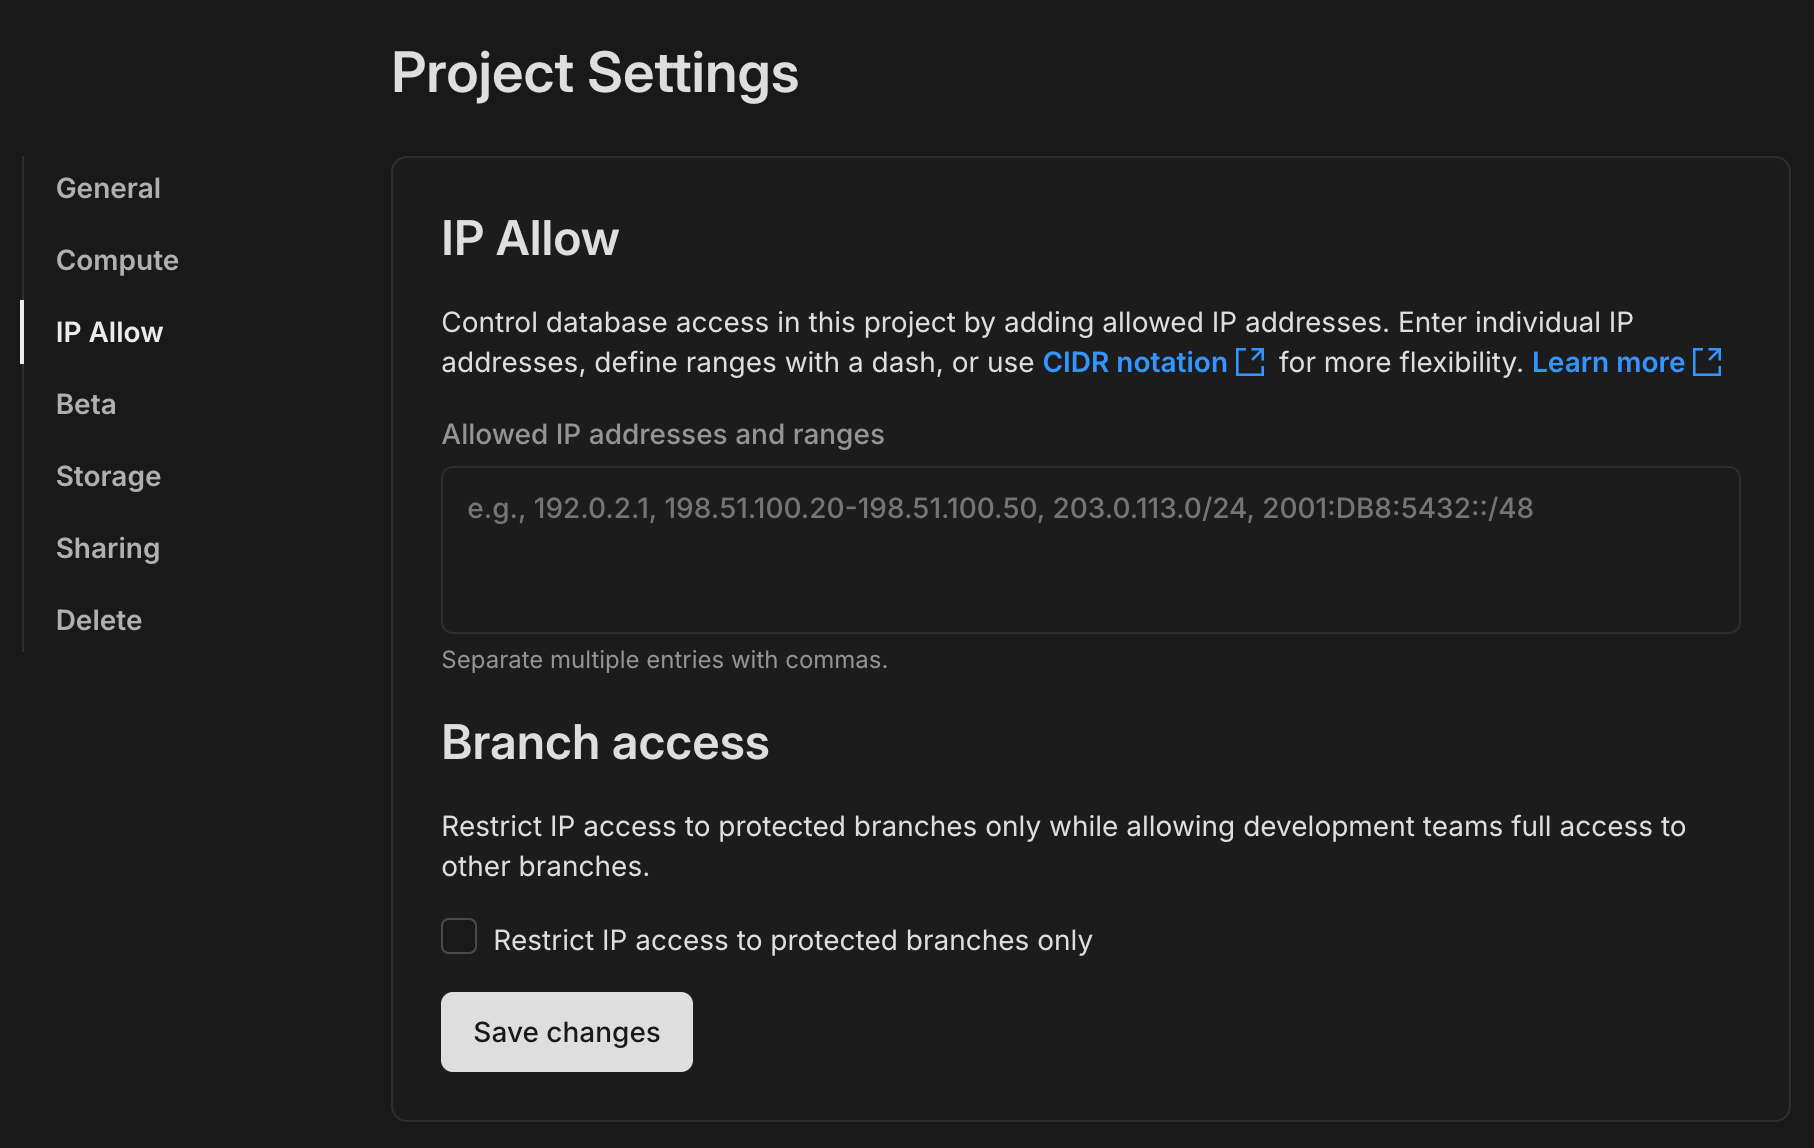 IP Allow configuration